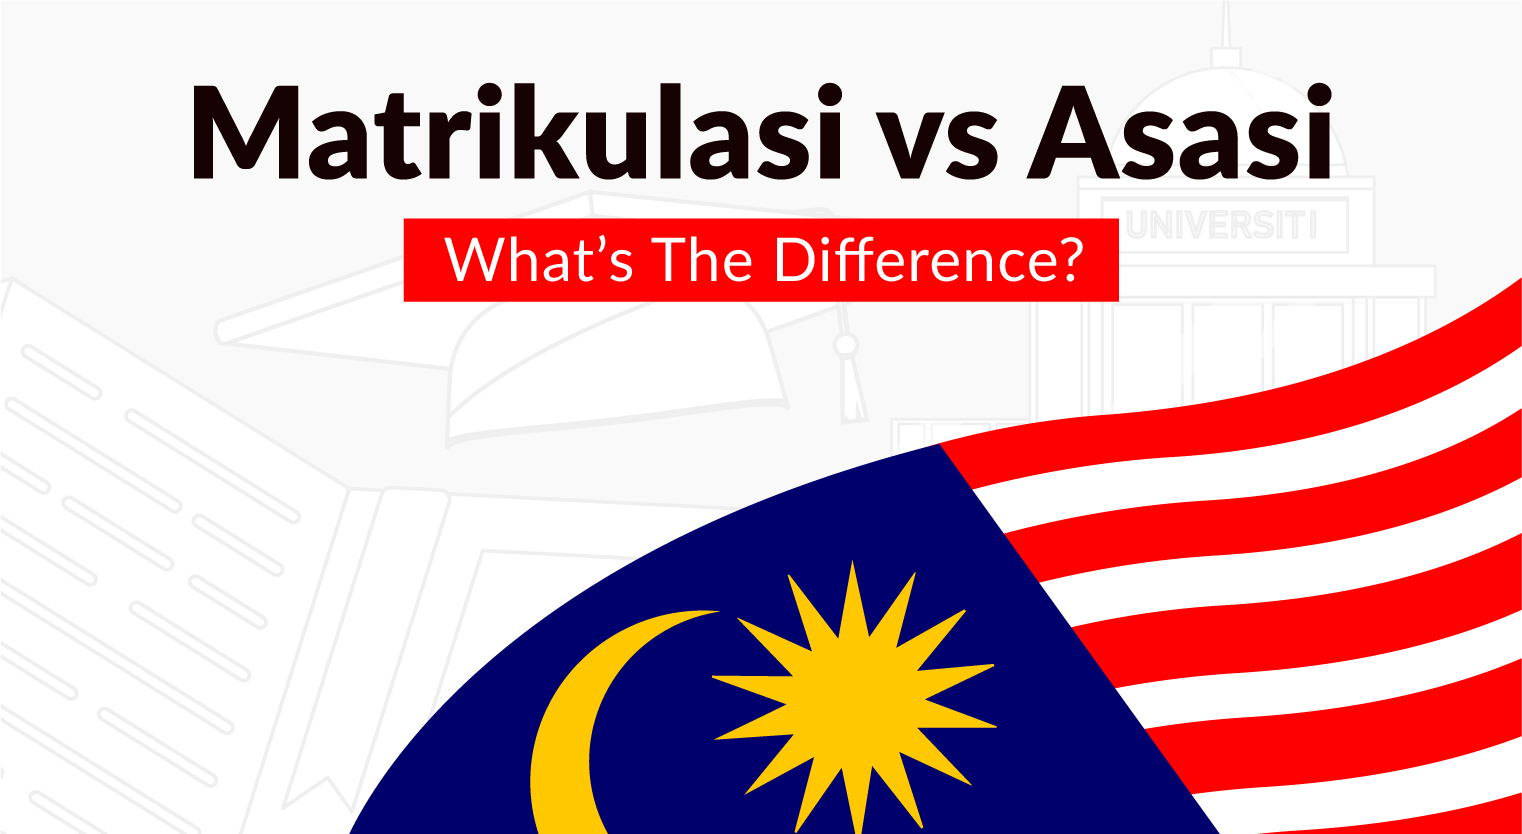 Matrikulasi vs Asasi: What’s the Difference? - Feature-Image